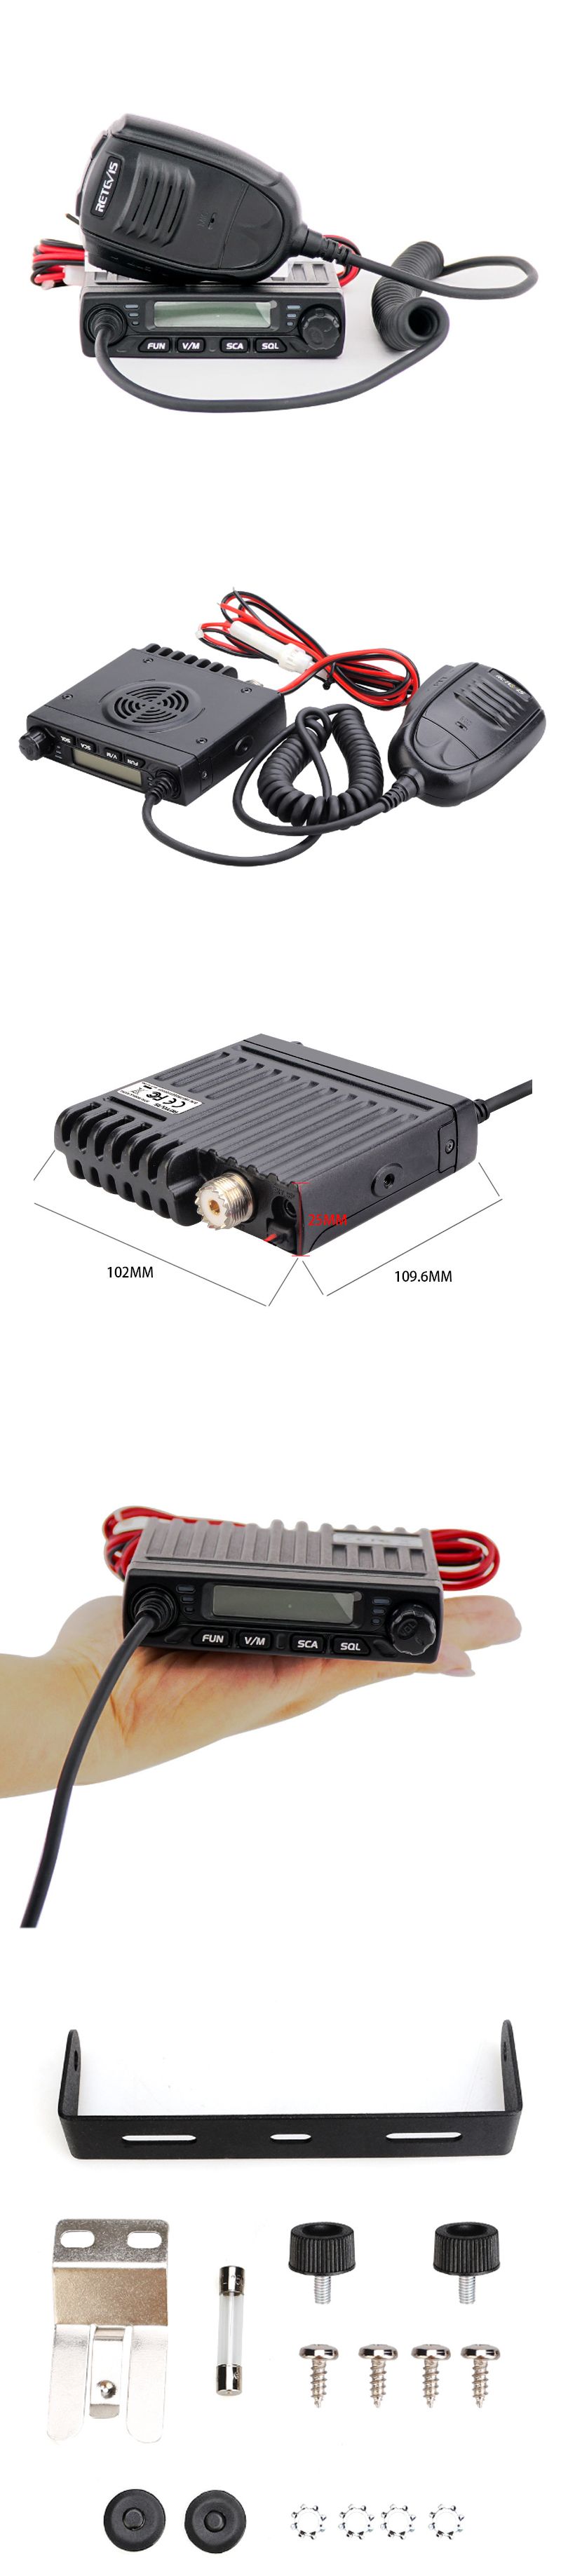 Retevis-RT98-15W-199-Channels-400-470-MHz-Mini-Car-Mobile-Transceiver-Scan-Function-Walkie-Talkie-Tr-1652020